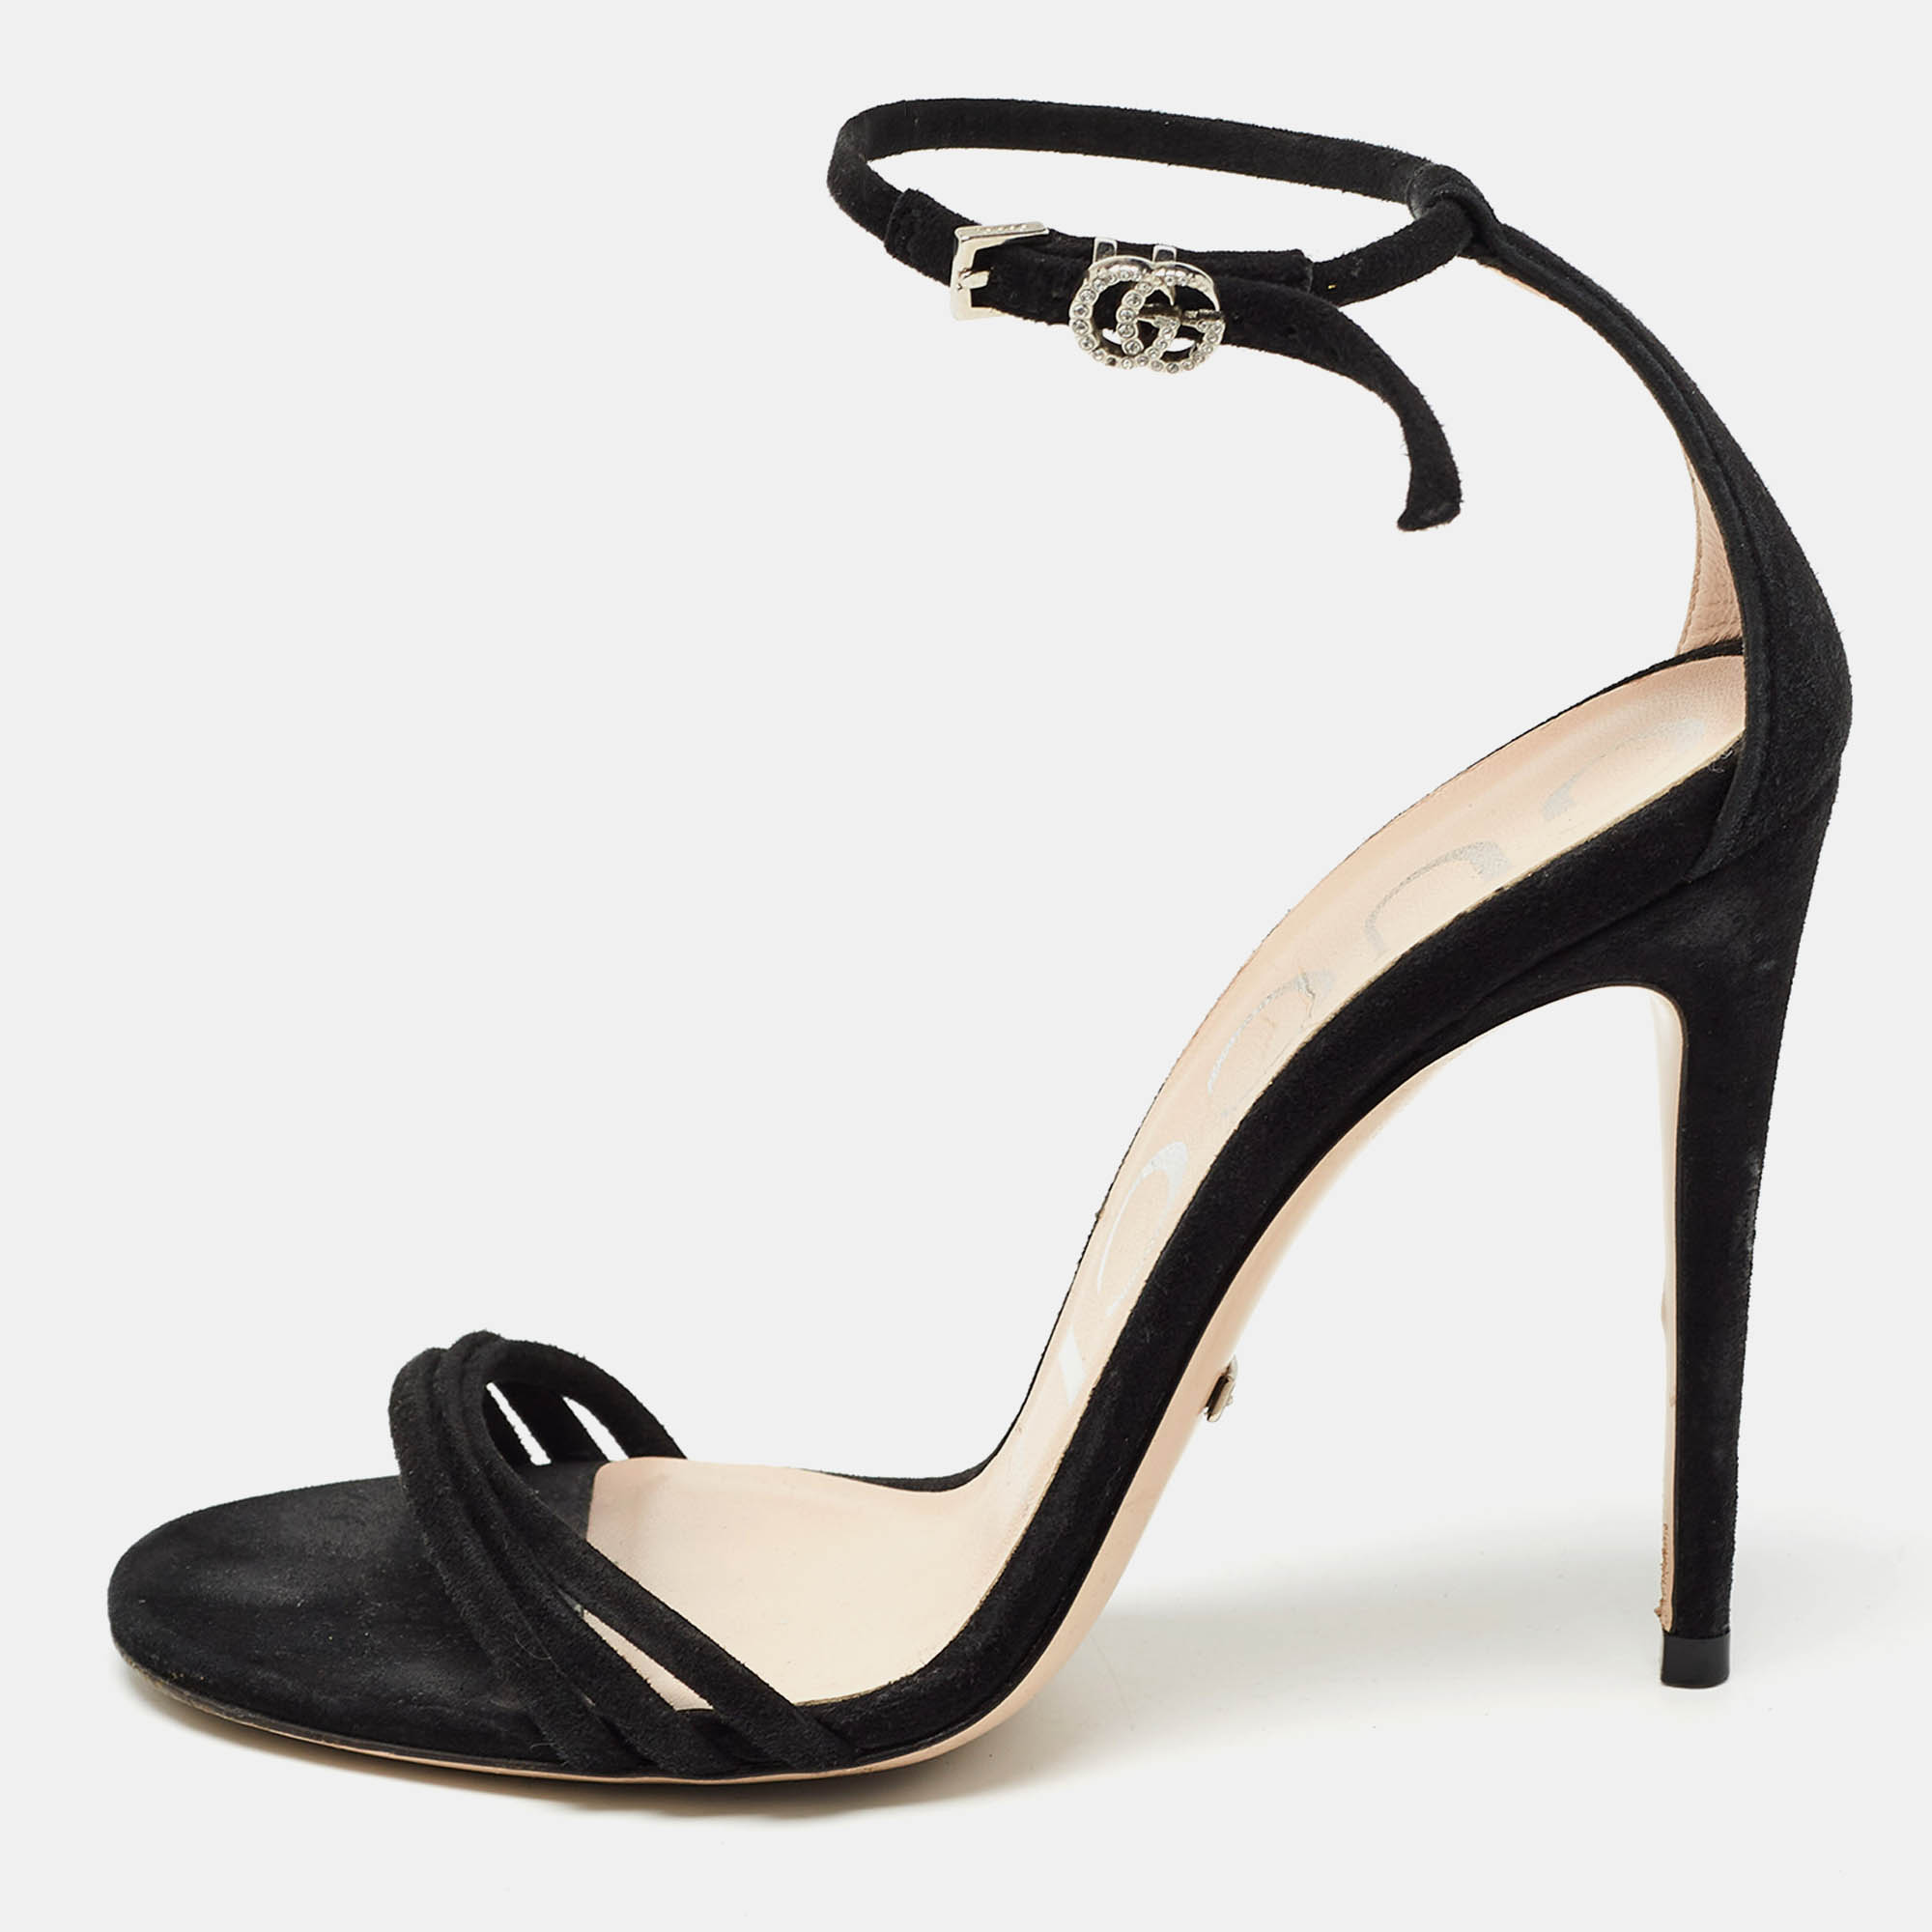 Gucci black suede ankle strap sandals size 35